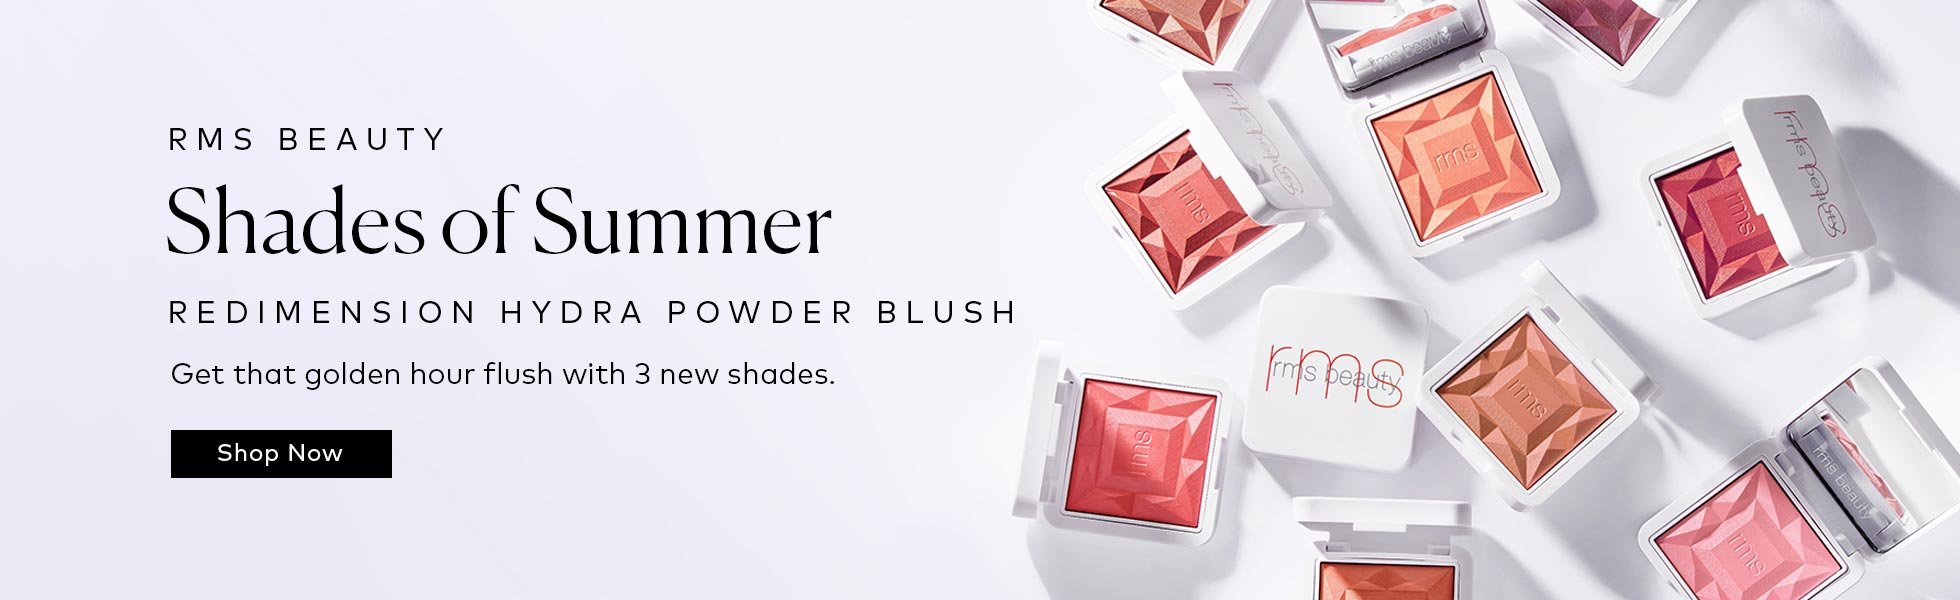 Shop the rms beauty ReDimension Hydra Powder Blush at Beautylish.com